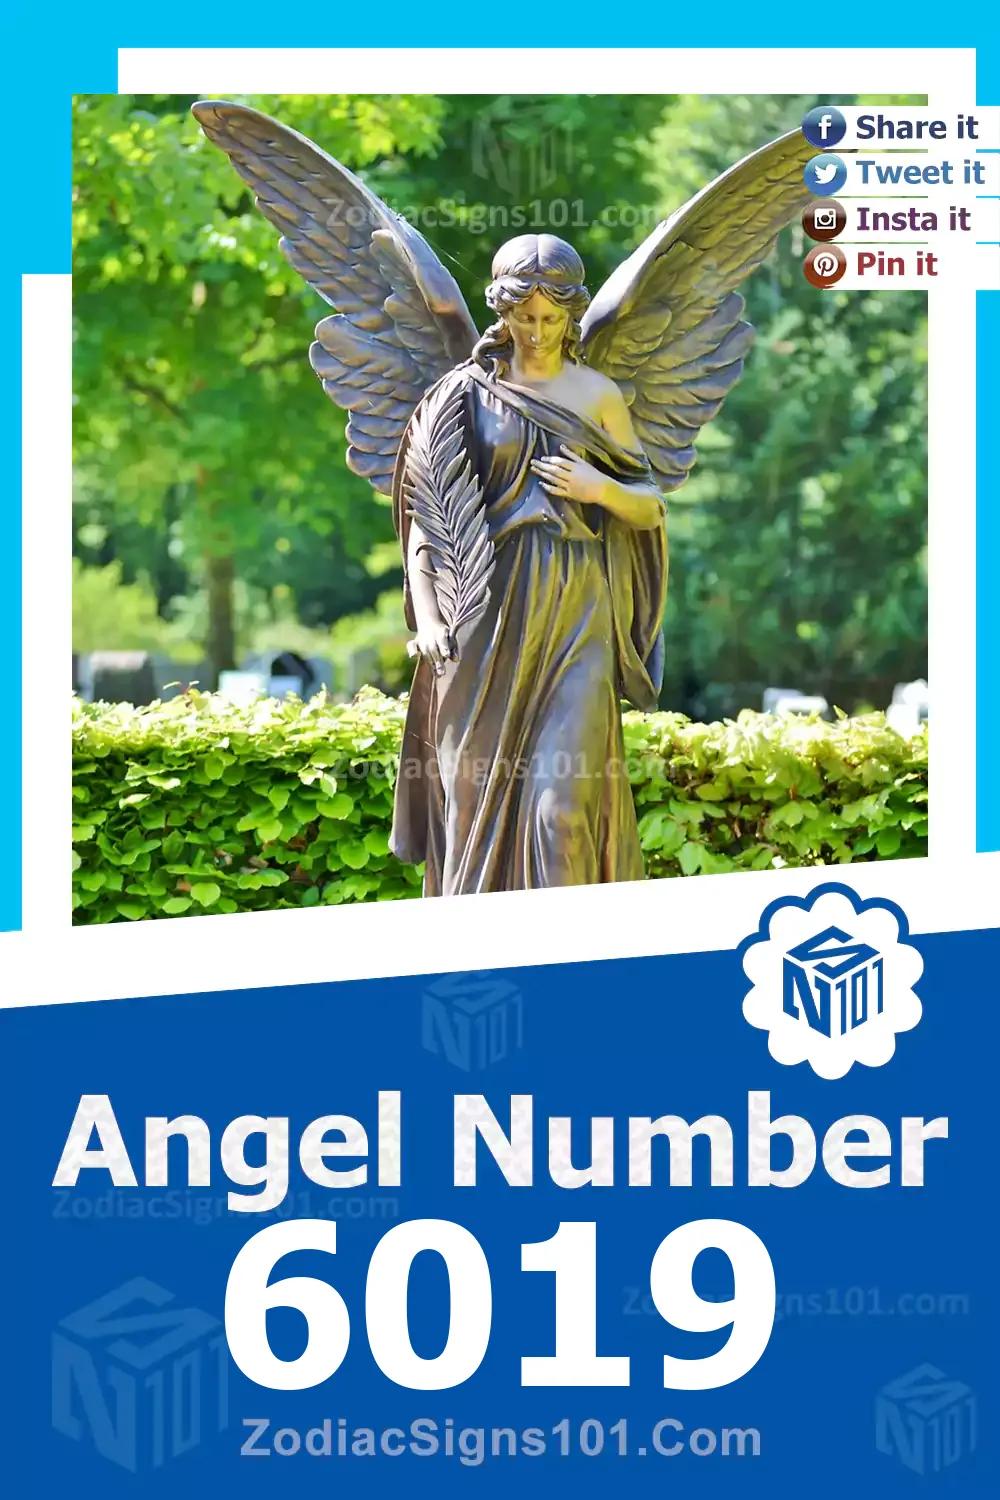 6019-Angel-Number-Meaning.jpg